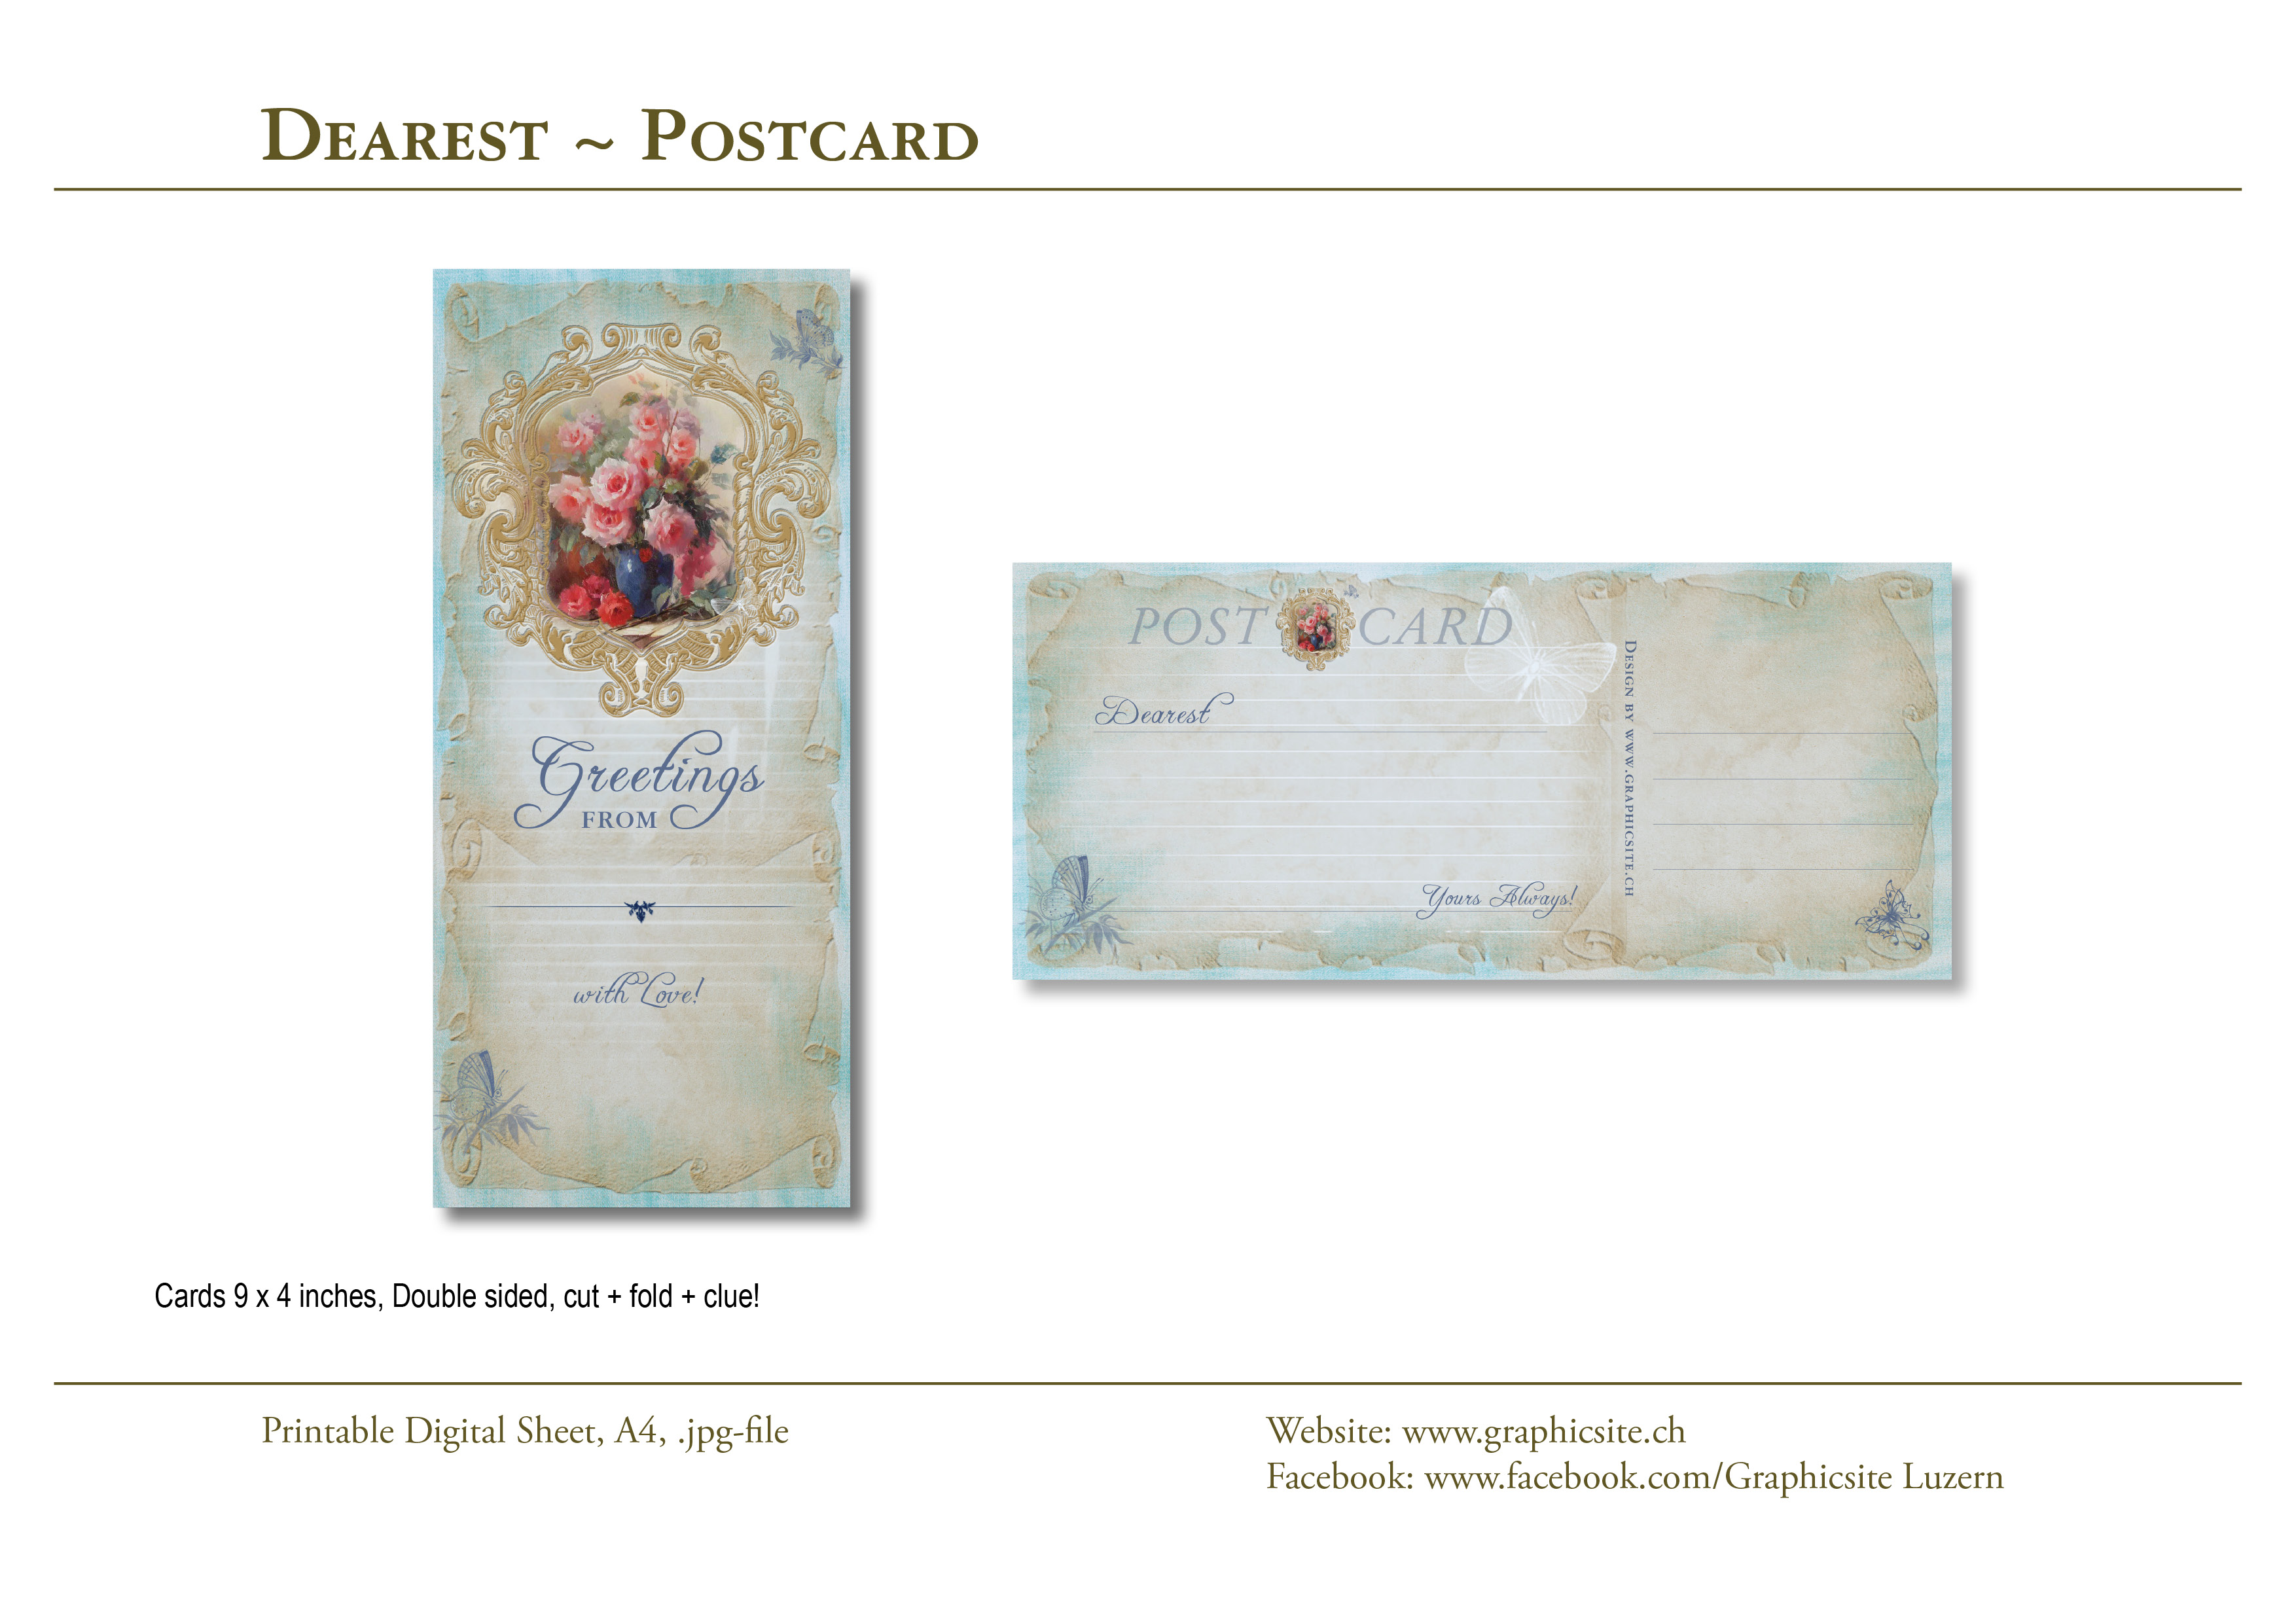 Printable Digital Sheet - Postcard 9x4 - Dearest